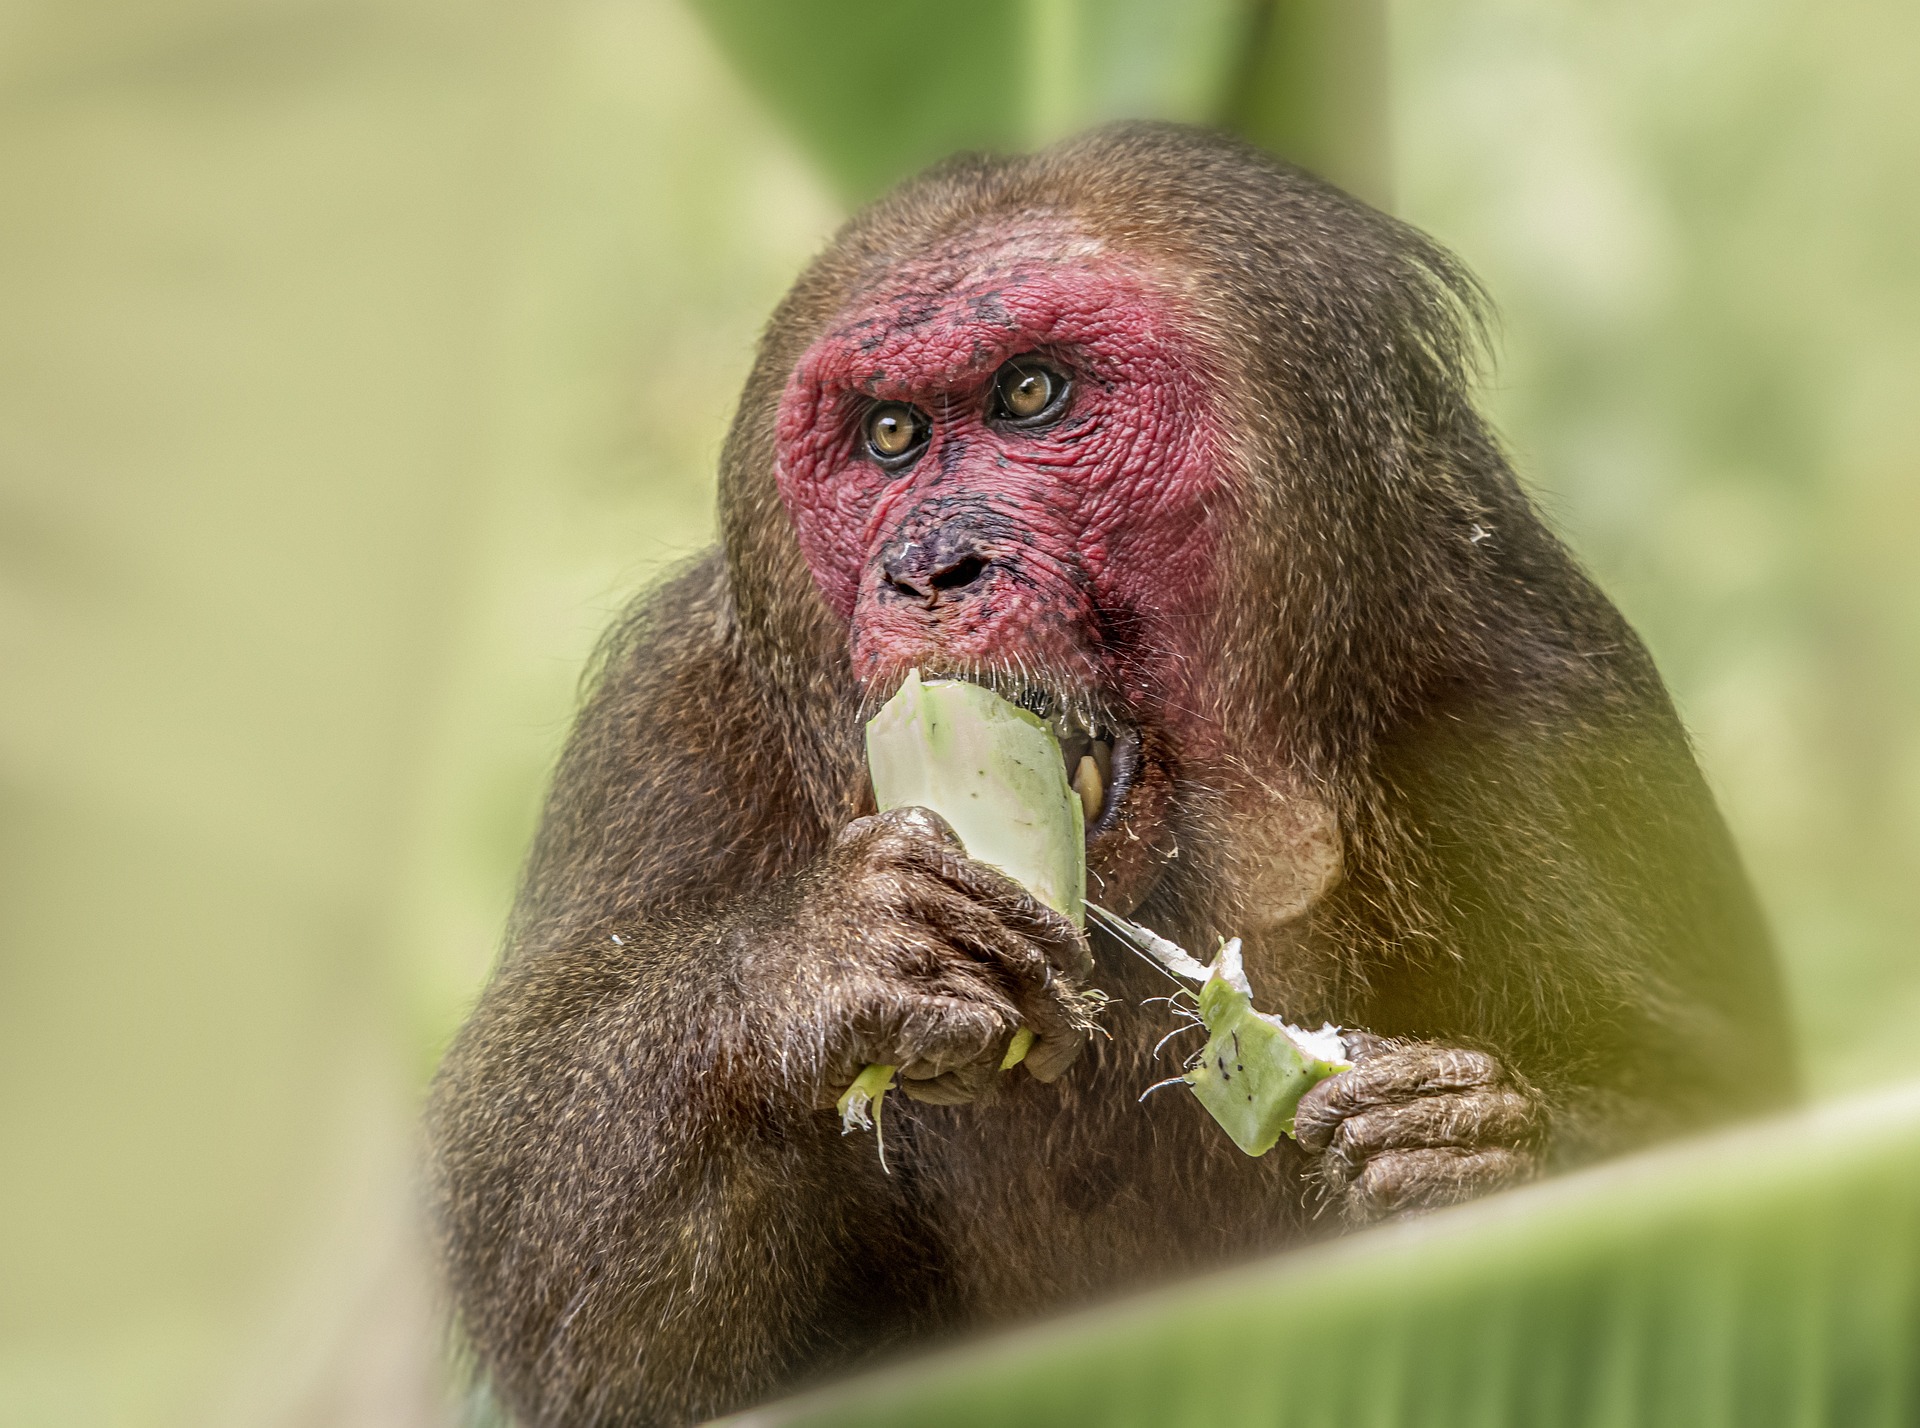 Stump-tailed macaque (Macaca arctoides)